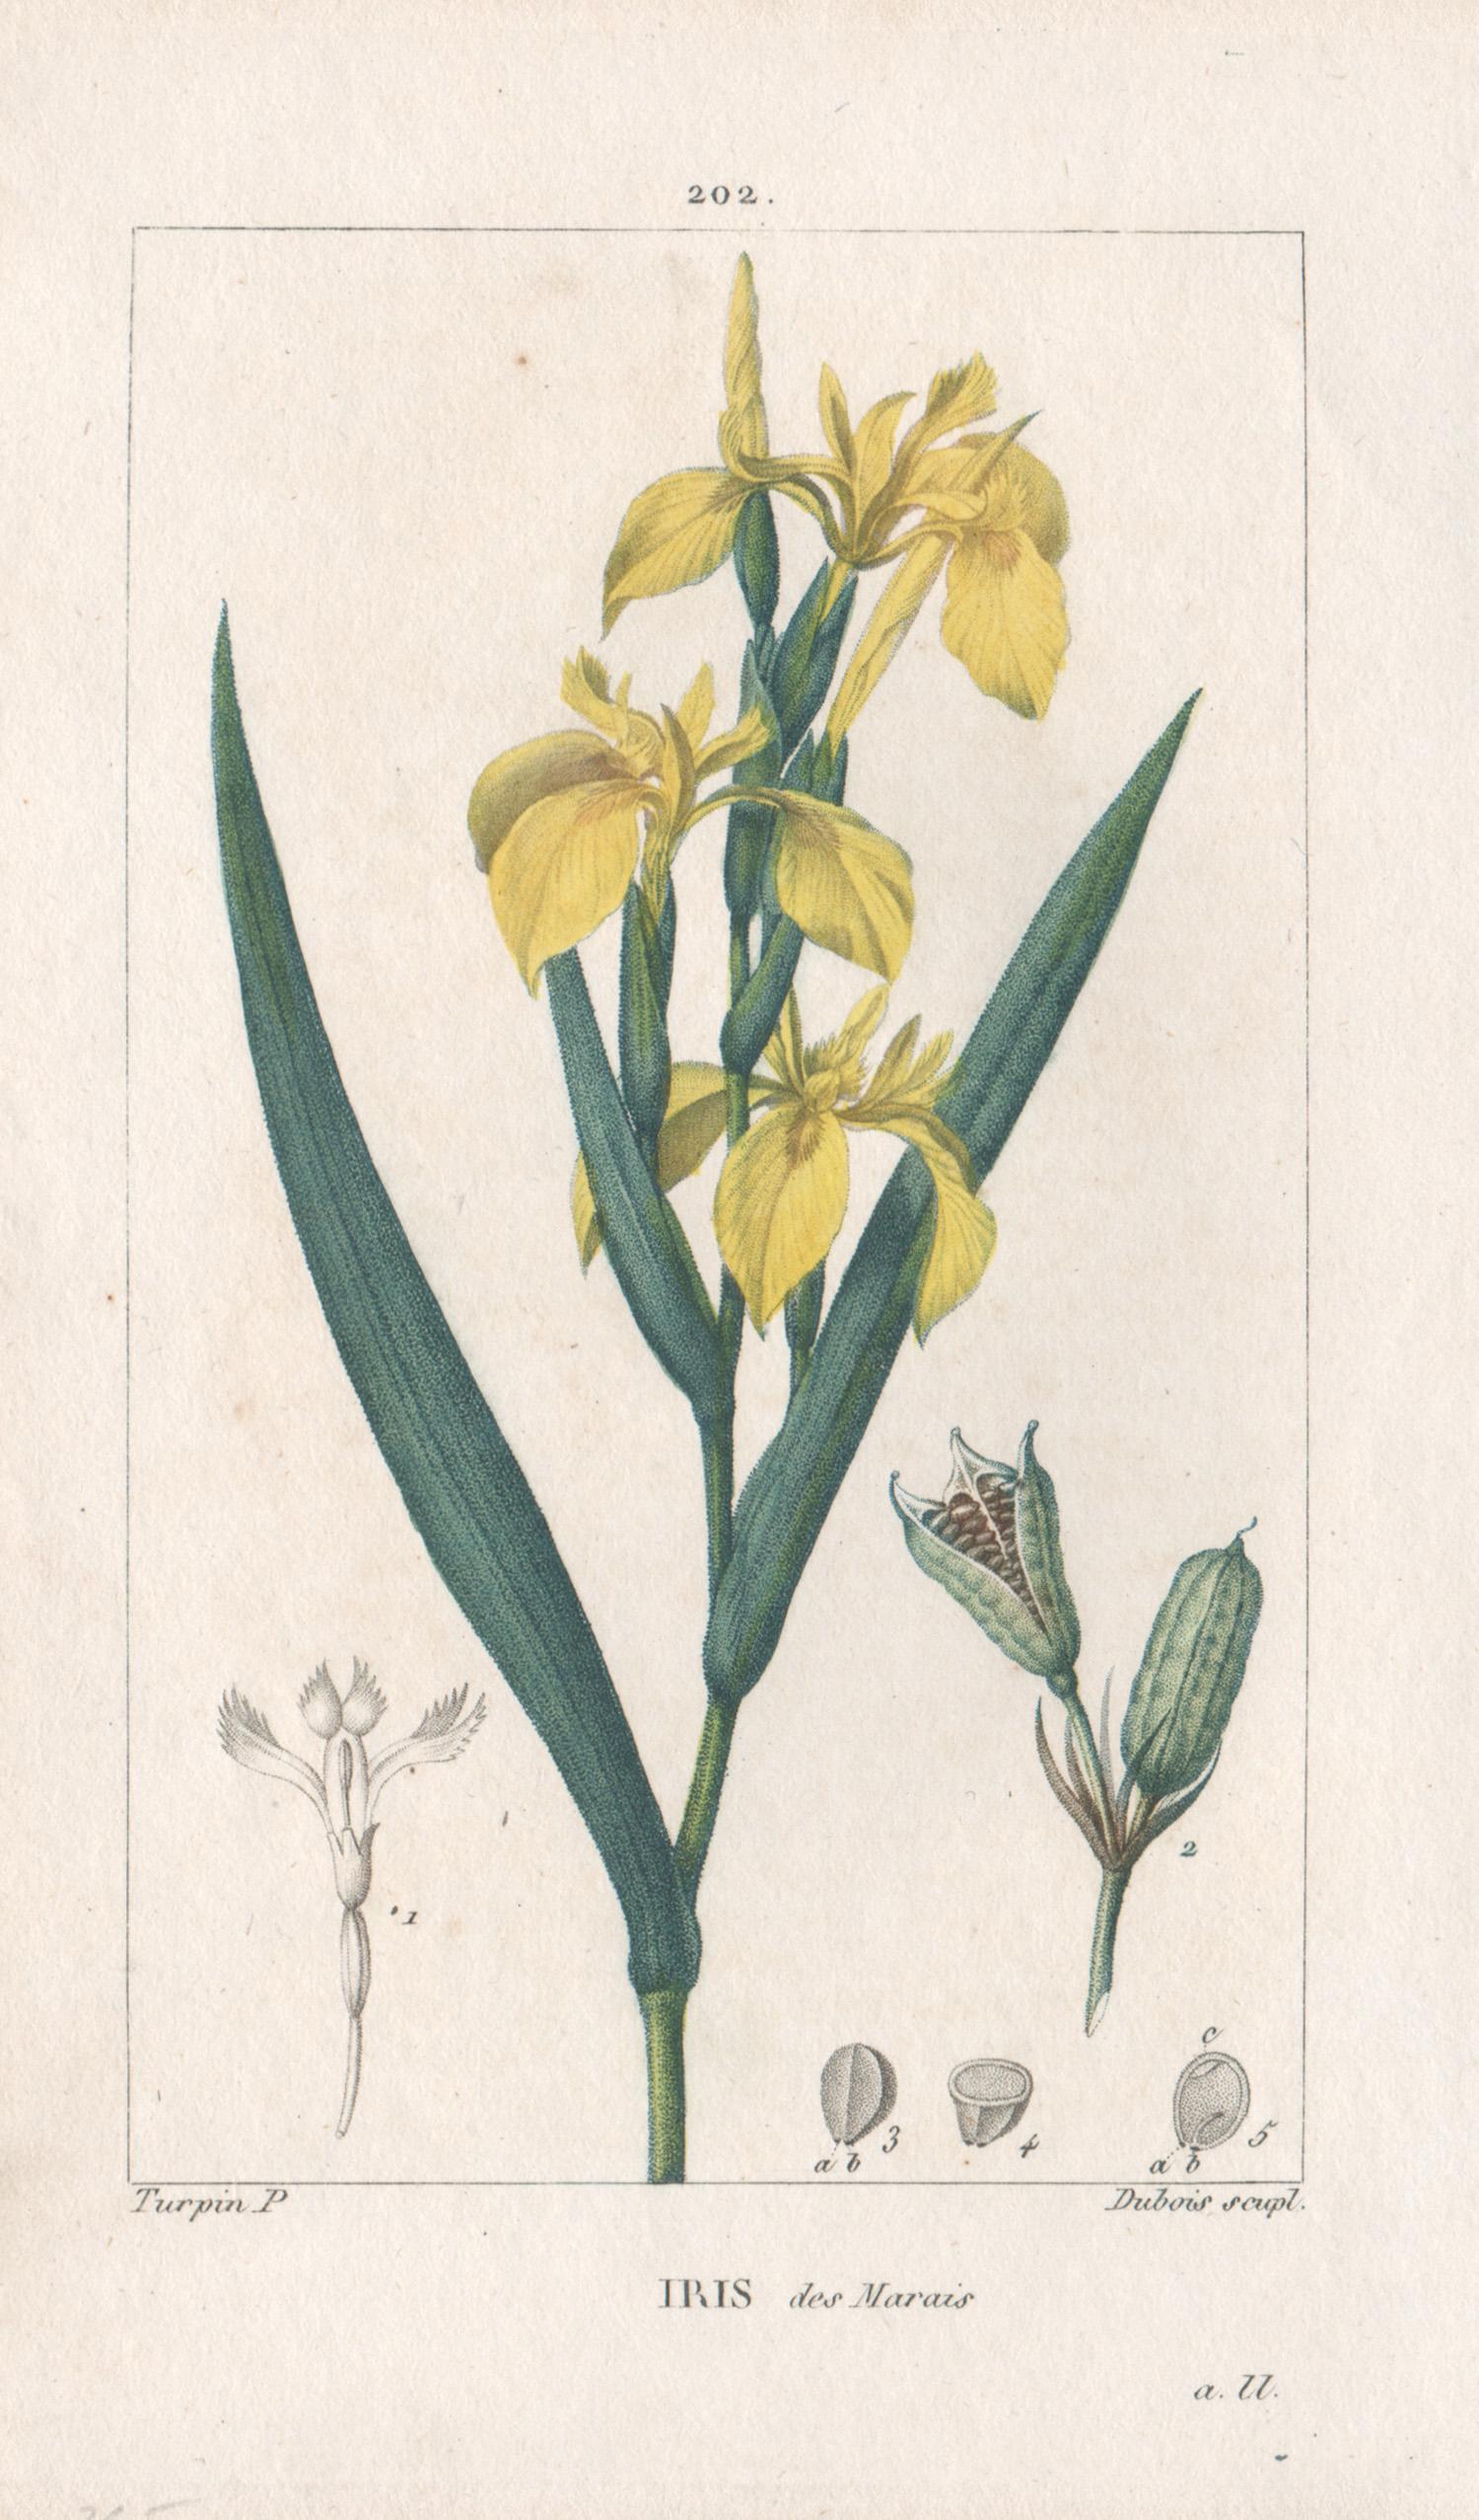 Iris des Marais (Yellow Iris), French botanical herbal flower engraving, 1818